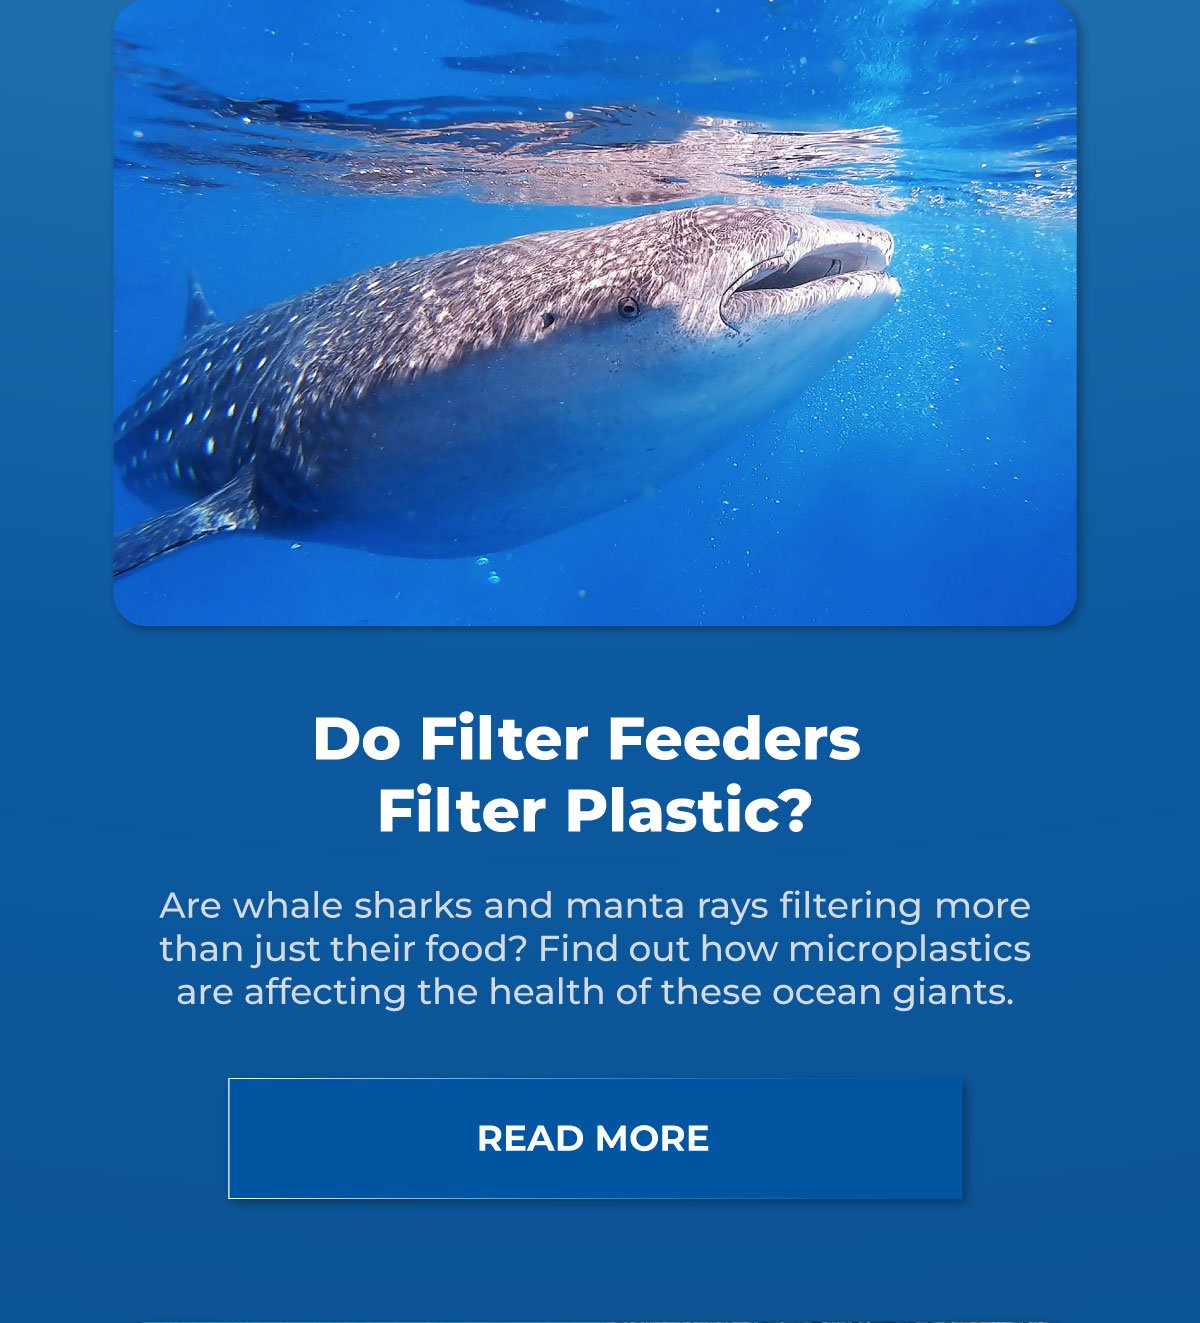 Do Filter Feeders Filter Plastic?